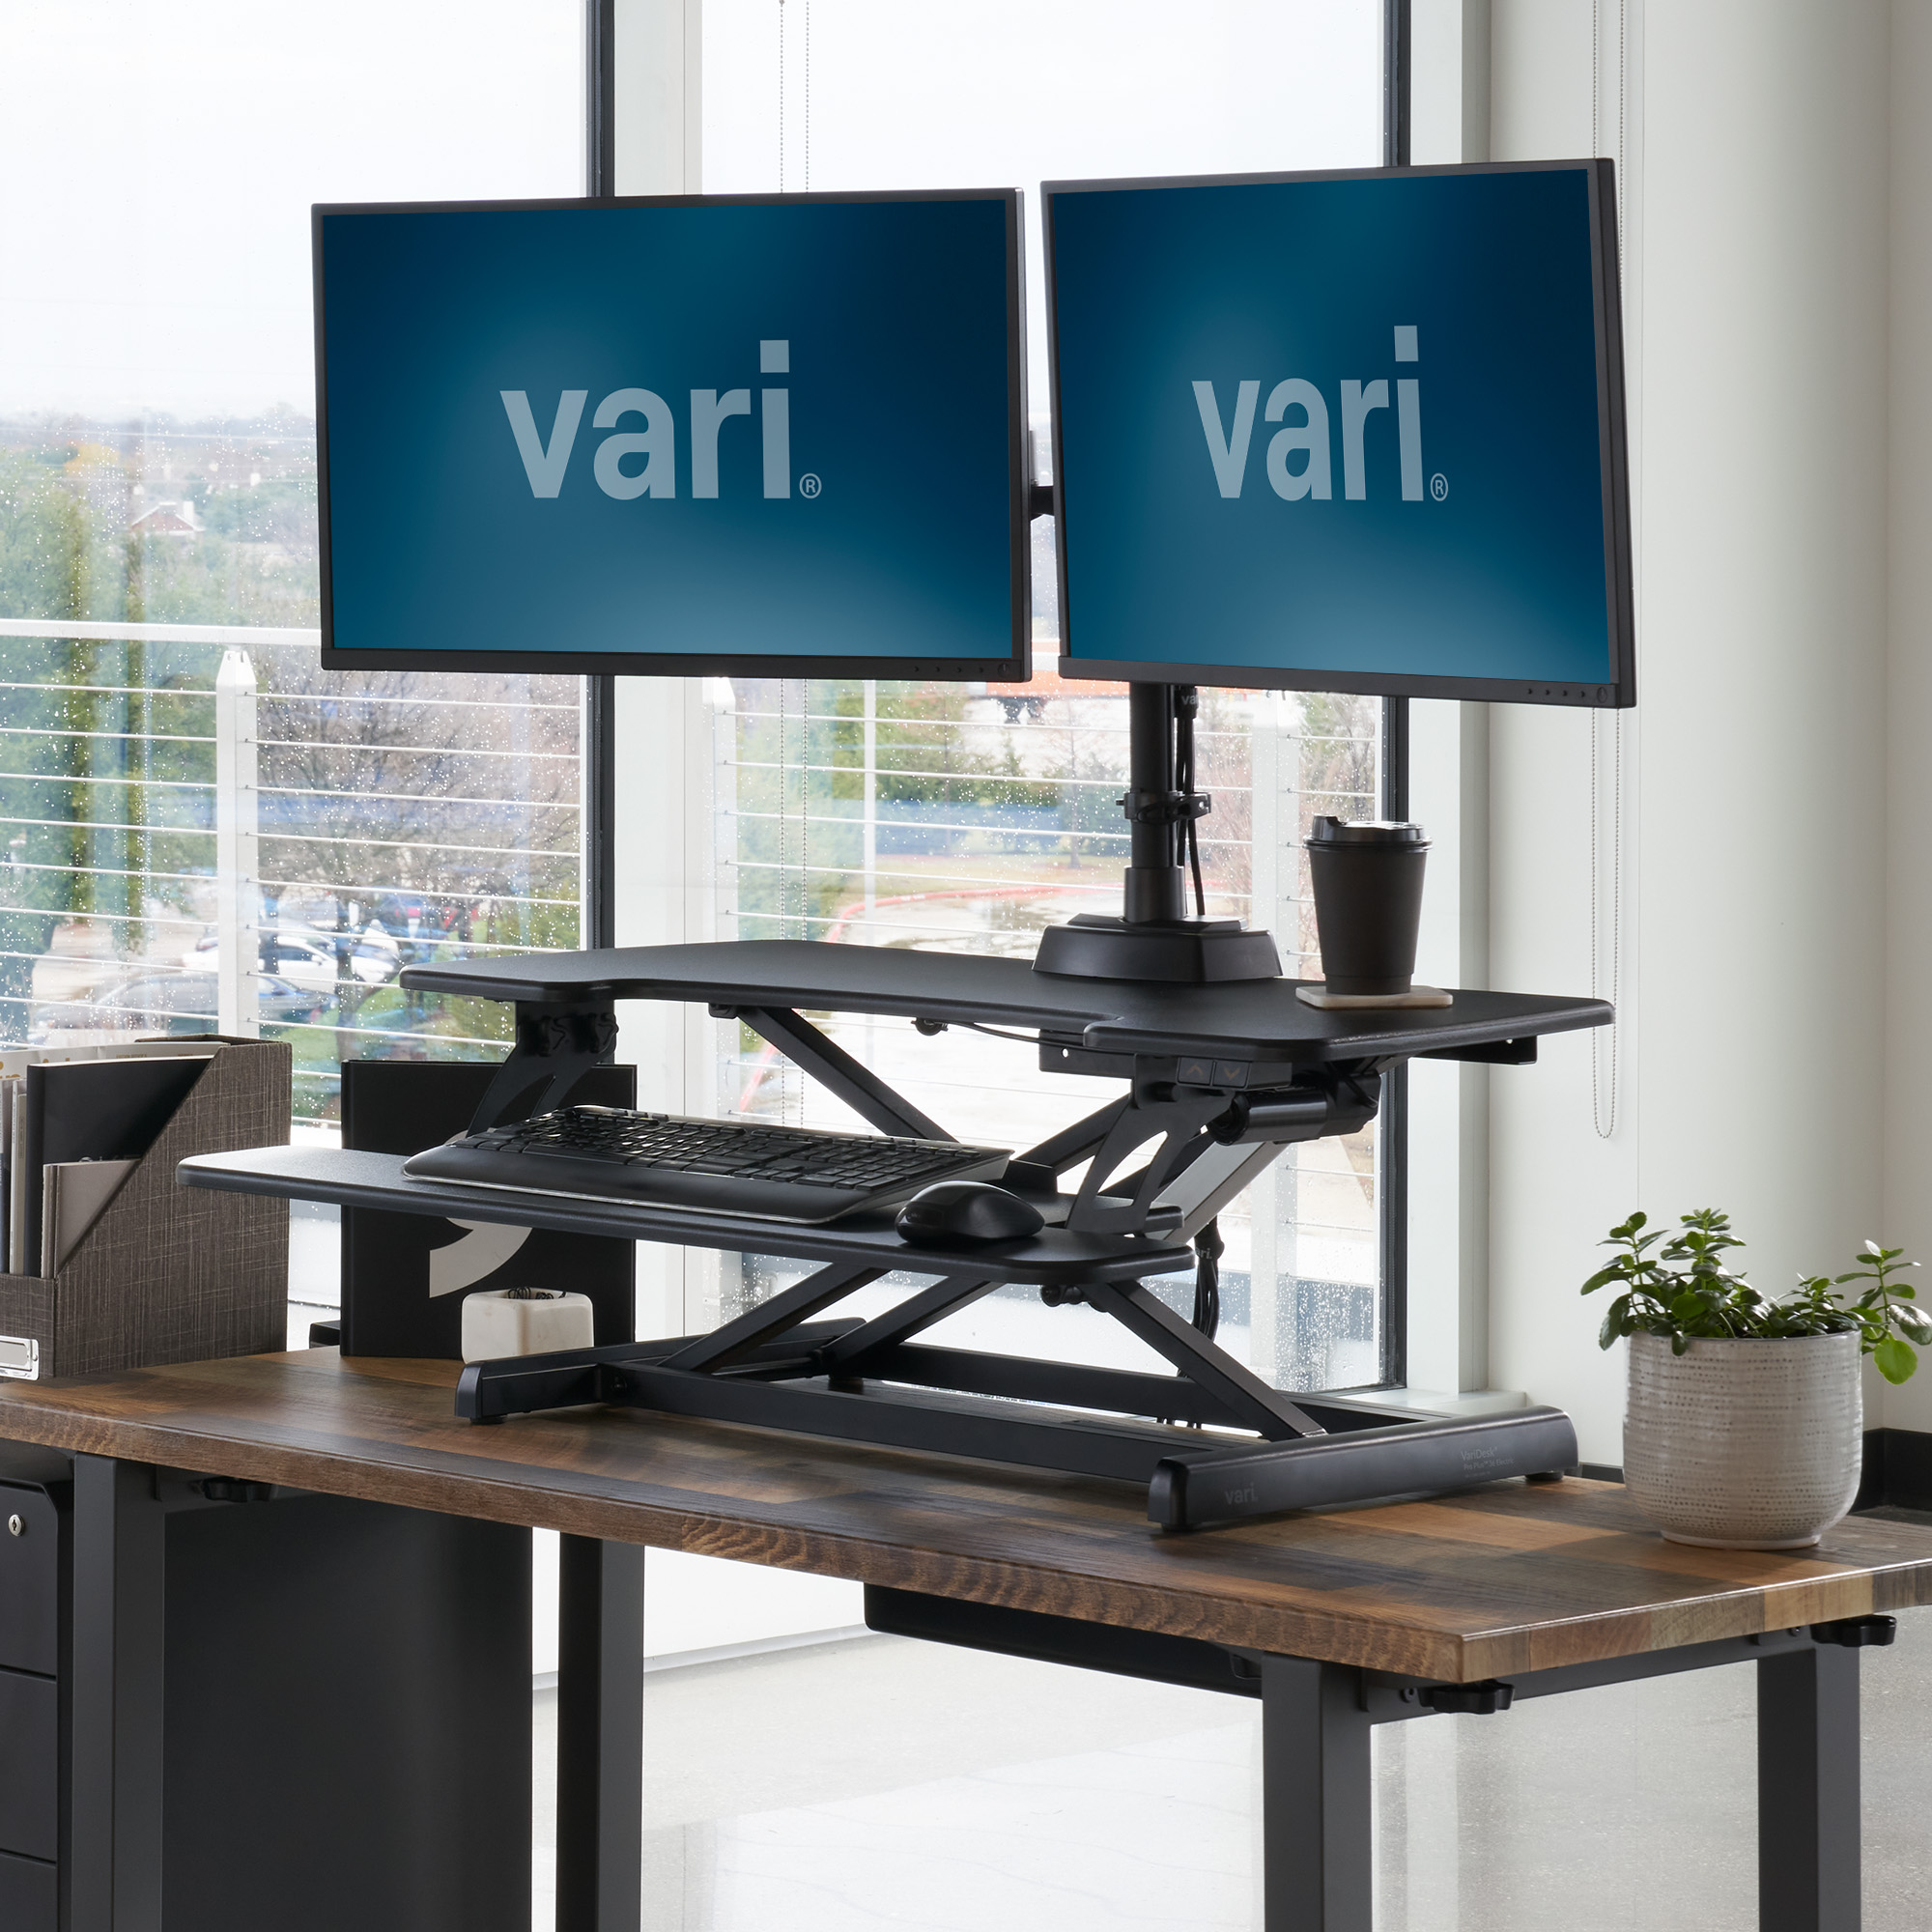 Vari VariDesk Pro Plus 36 - Adjustable Desk Converter with 11 Height  Settings - Laptop Sit Stand Desk Riser for Table Tops and Home Office-  Fully